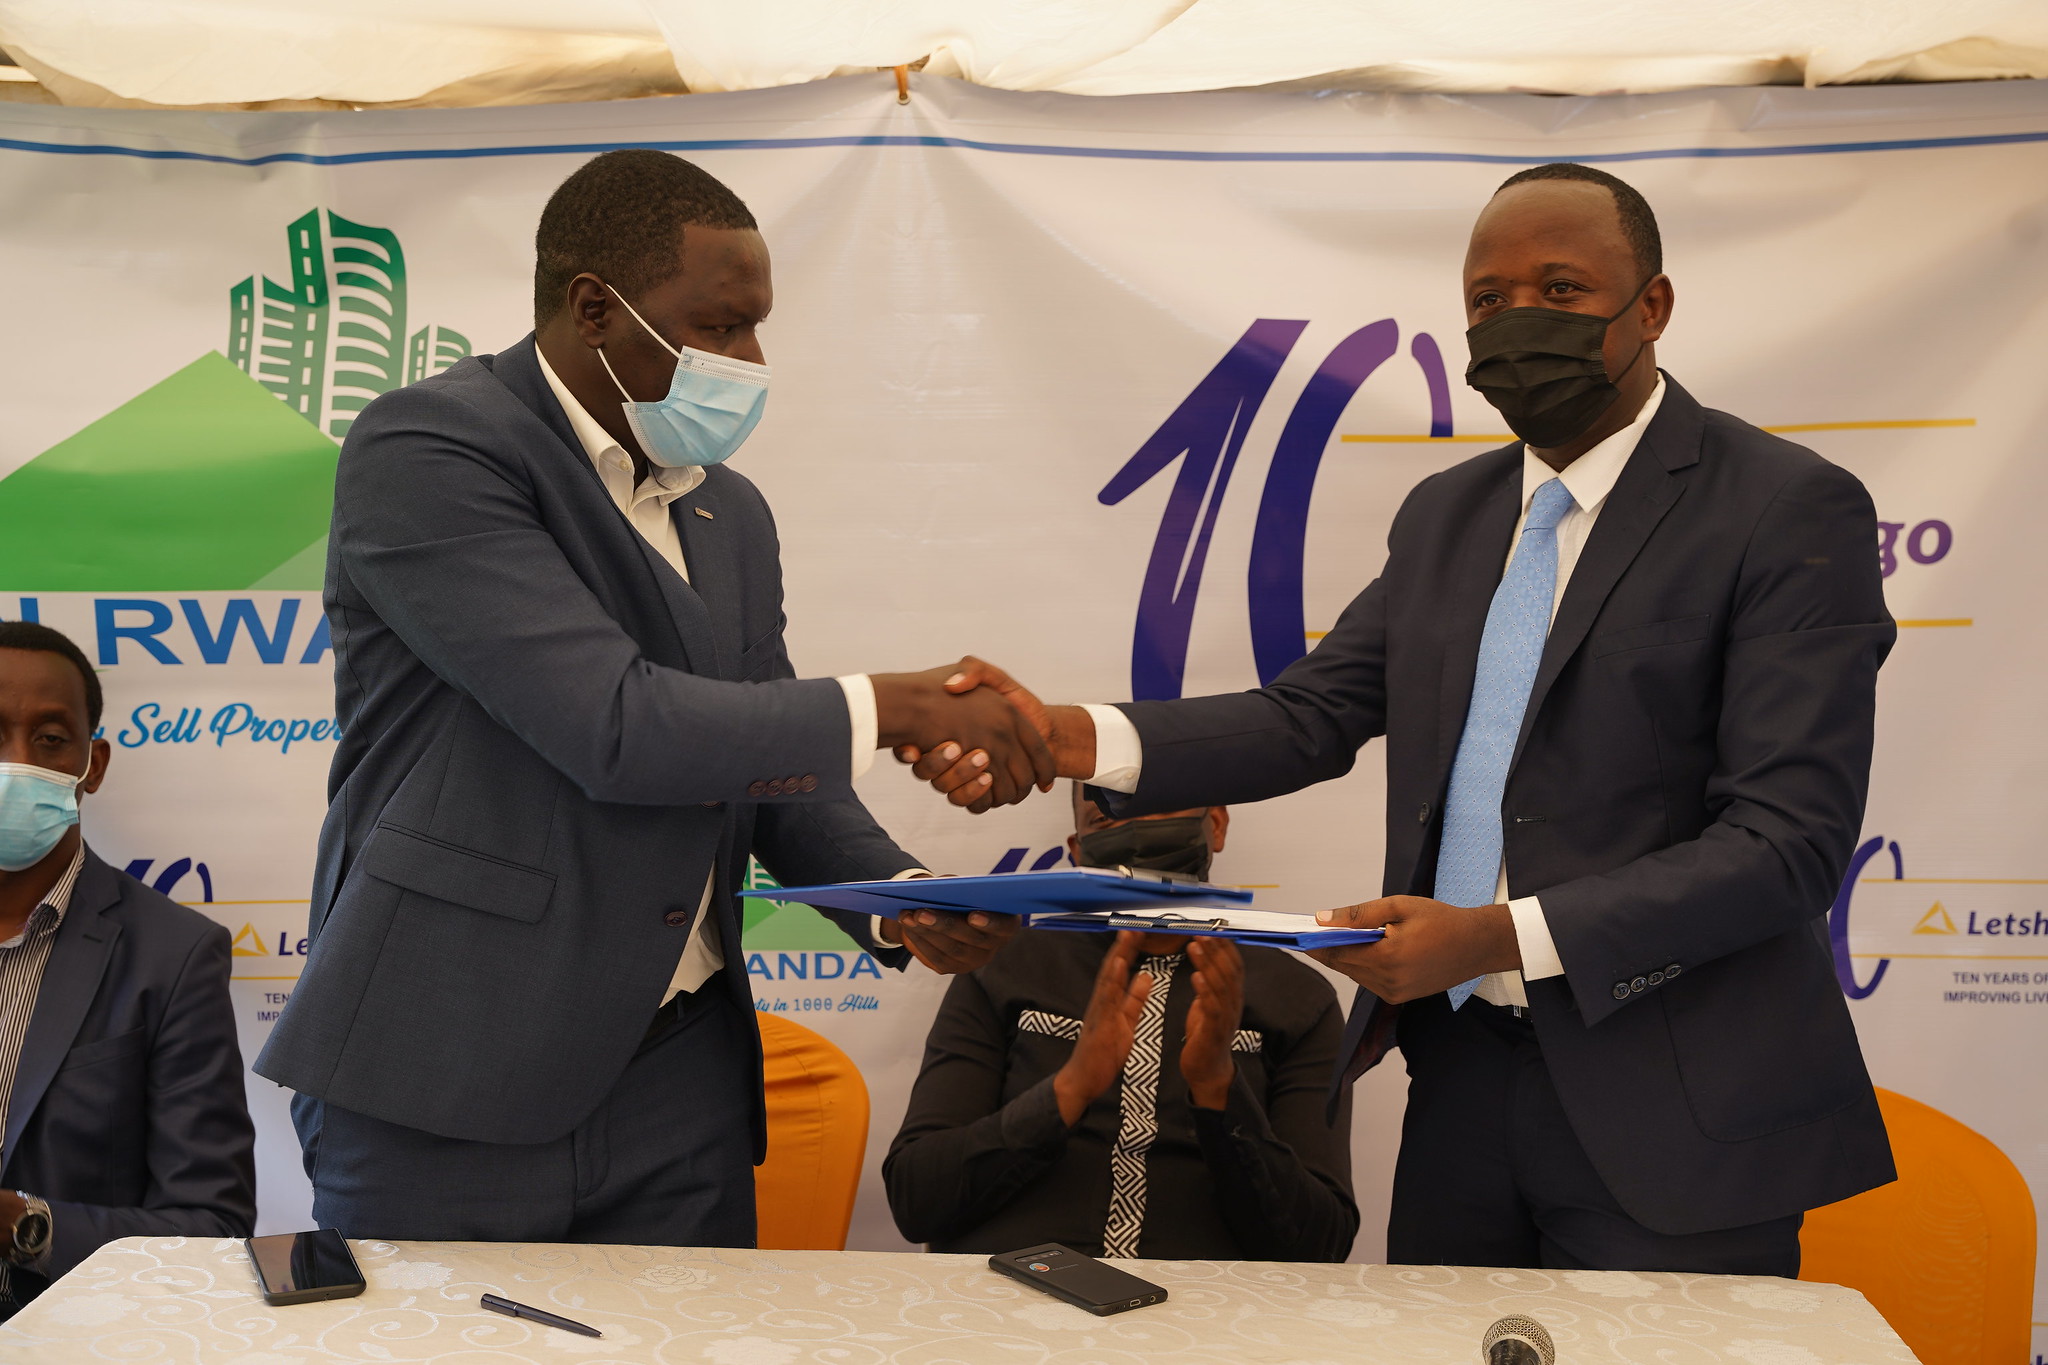 Philemon Hagenimana, Chief Executive Officer of KTN Rwanda and Gilbert Ndahimana, Head of Sales at Letshego Rwanda Plc after signing the agreement. 